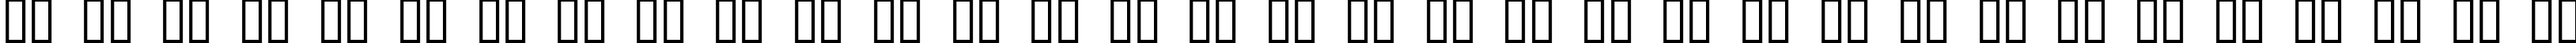 Пример написания русского алфавита шрифтом Whitechapel BB